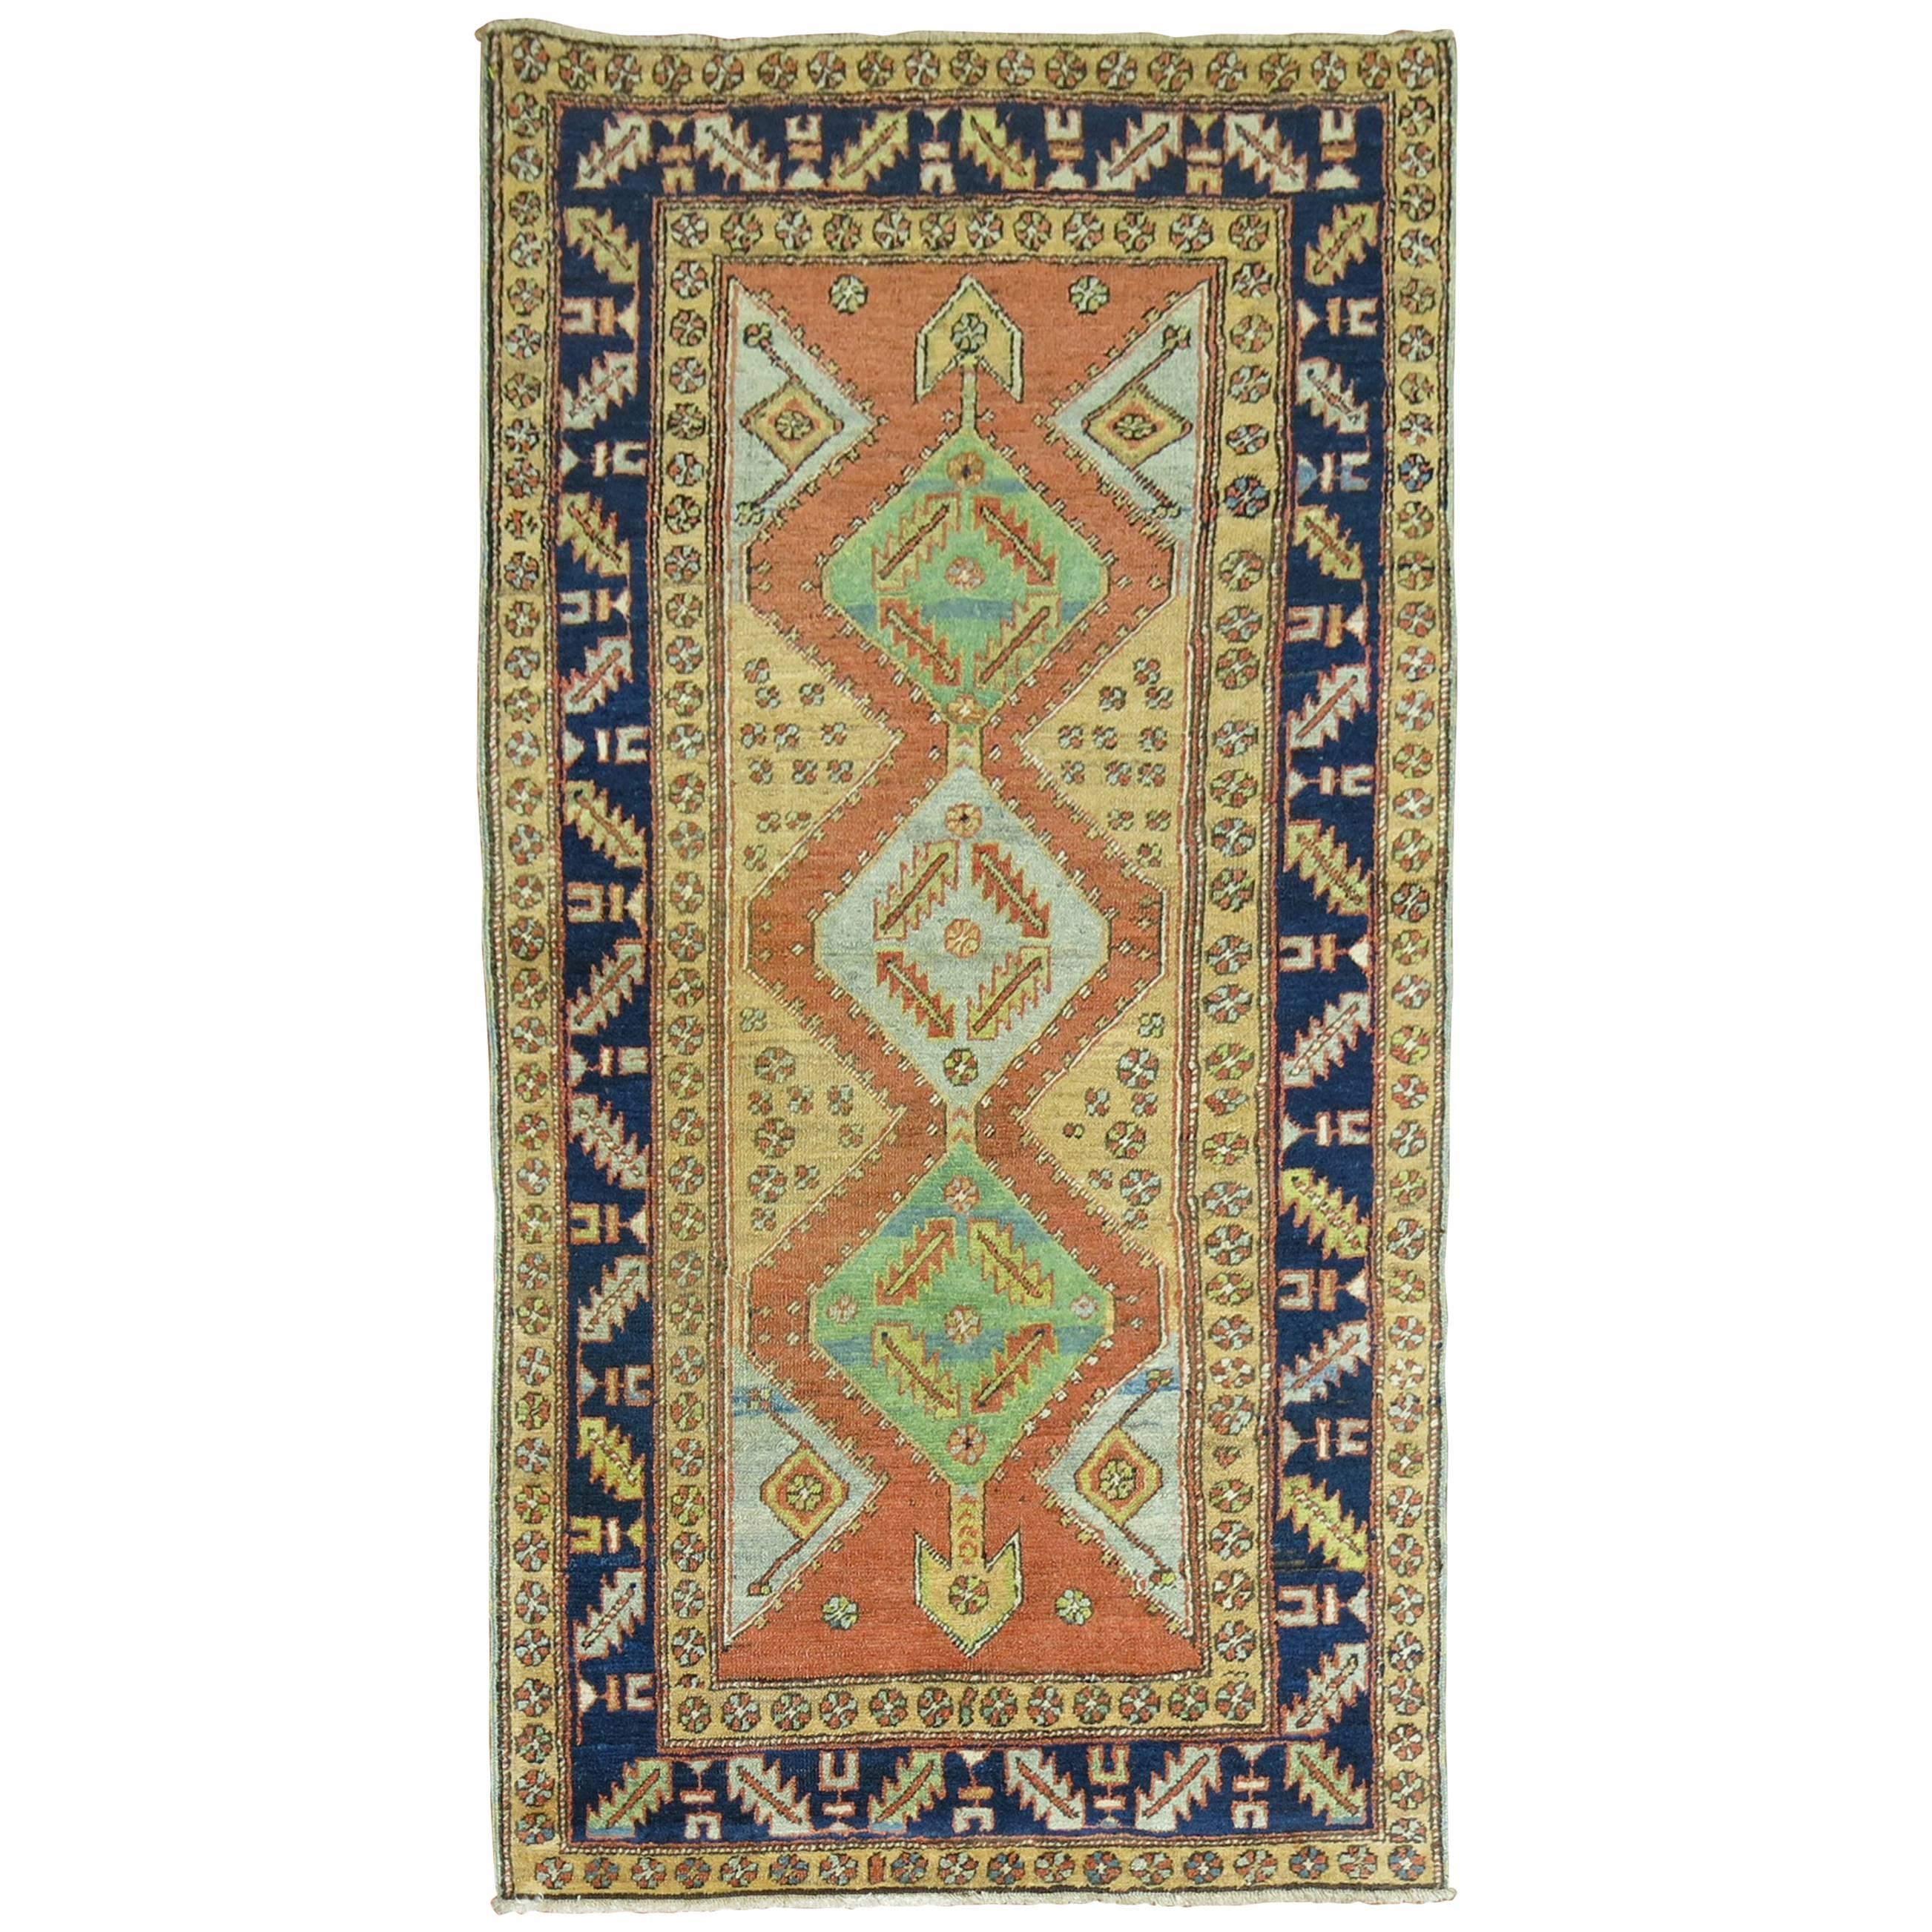 Antique Persian Heriz Rug in Bright Colors